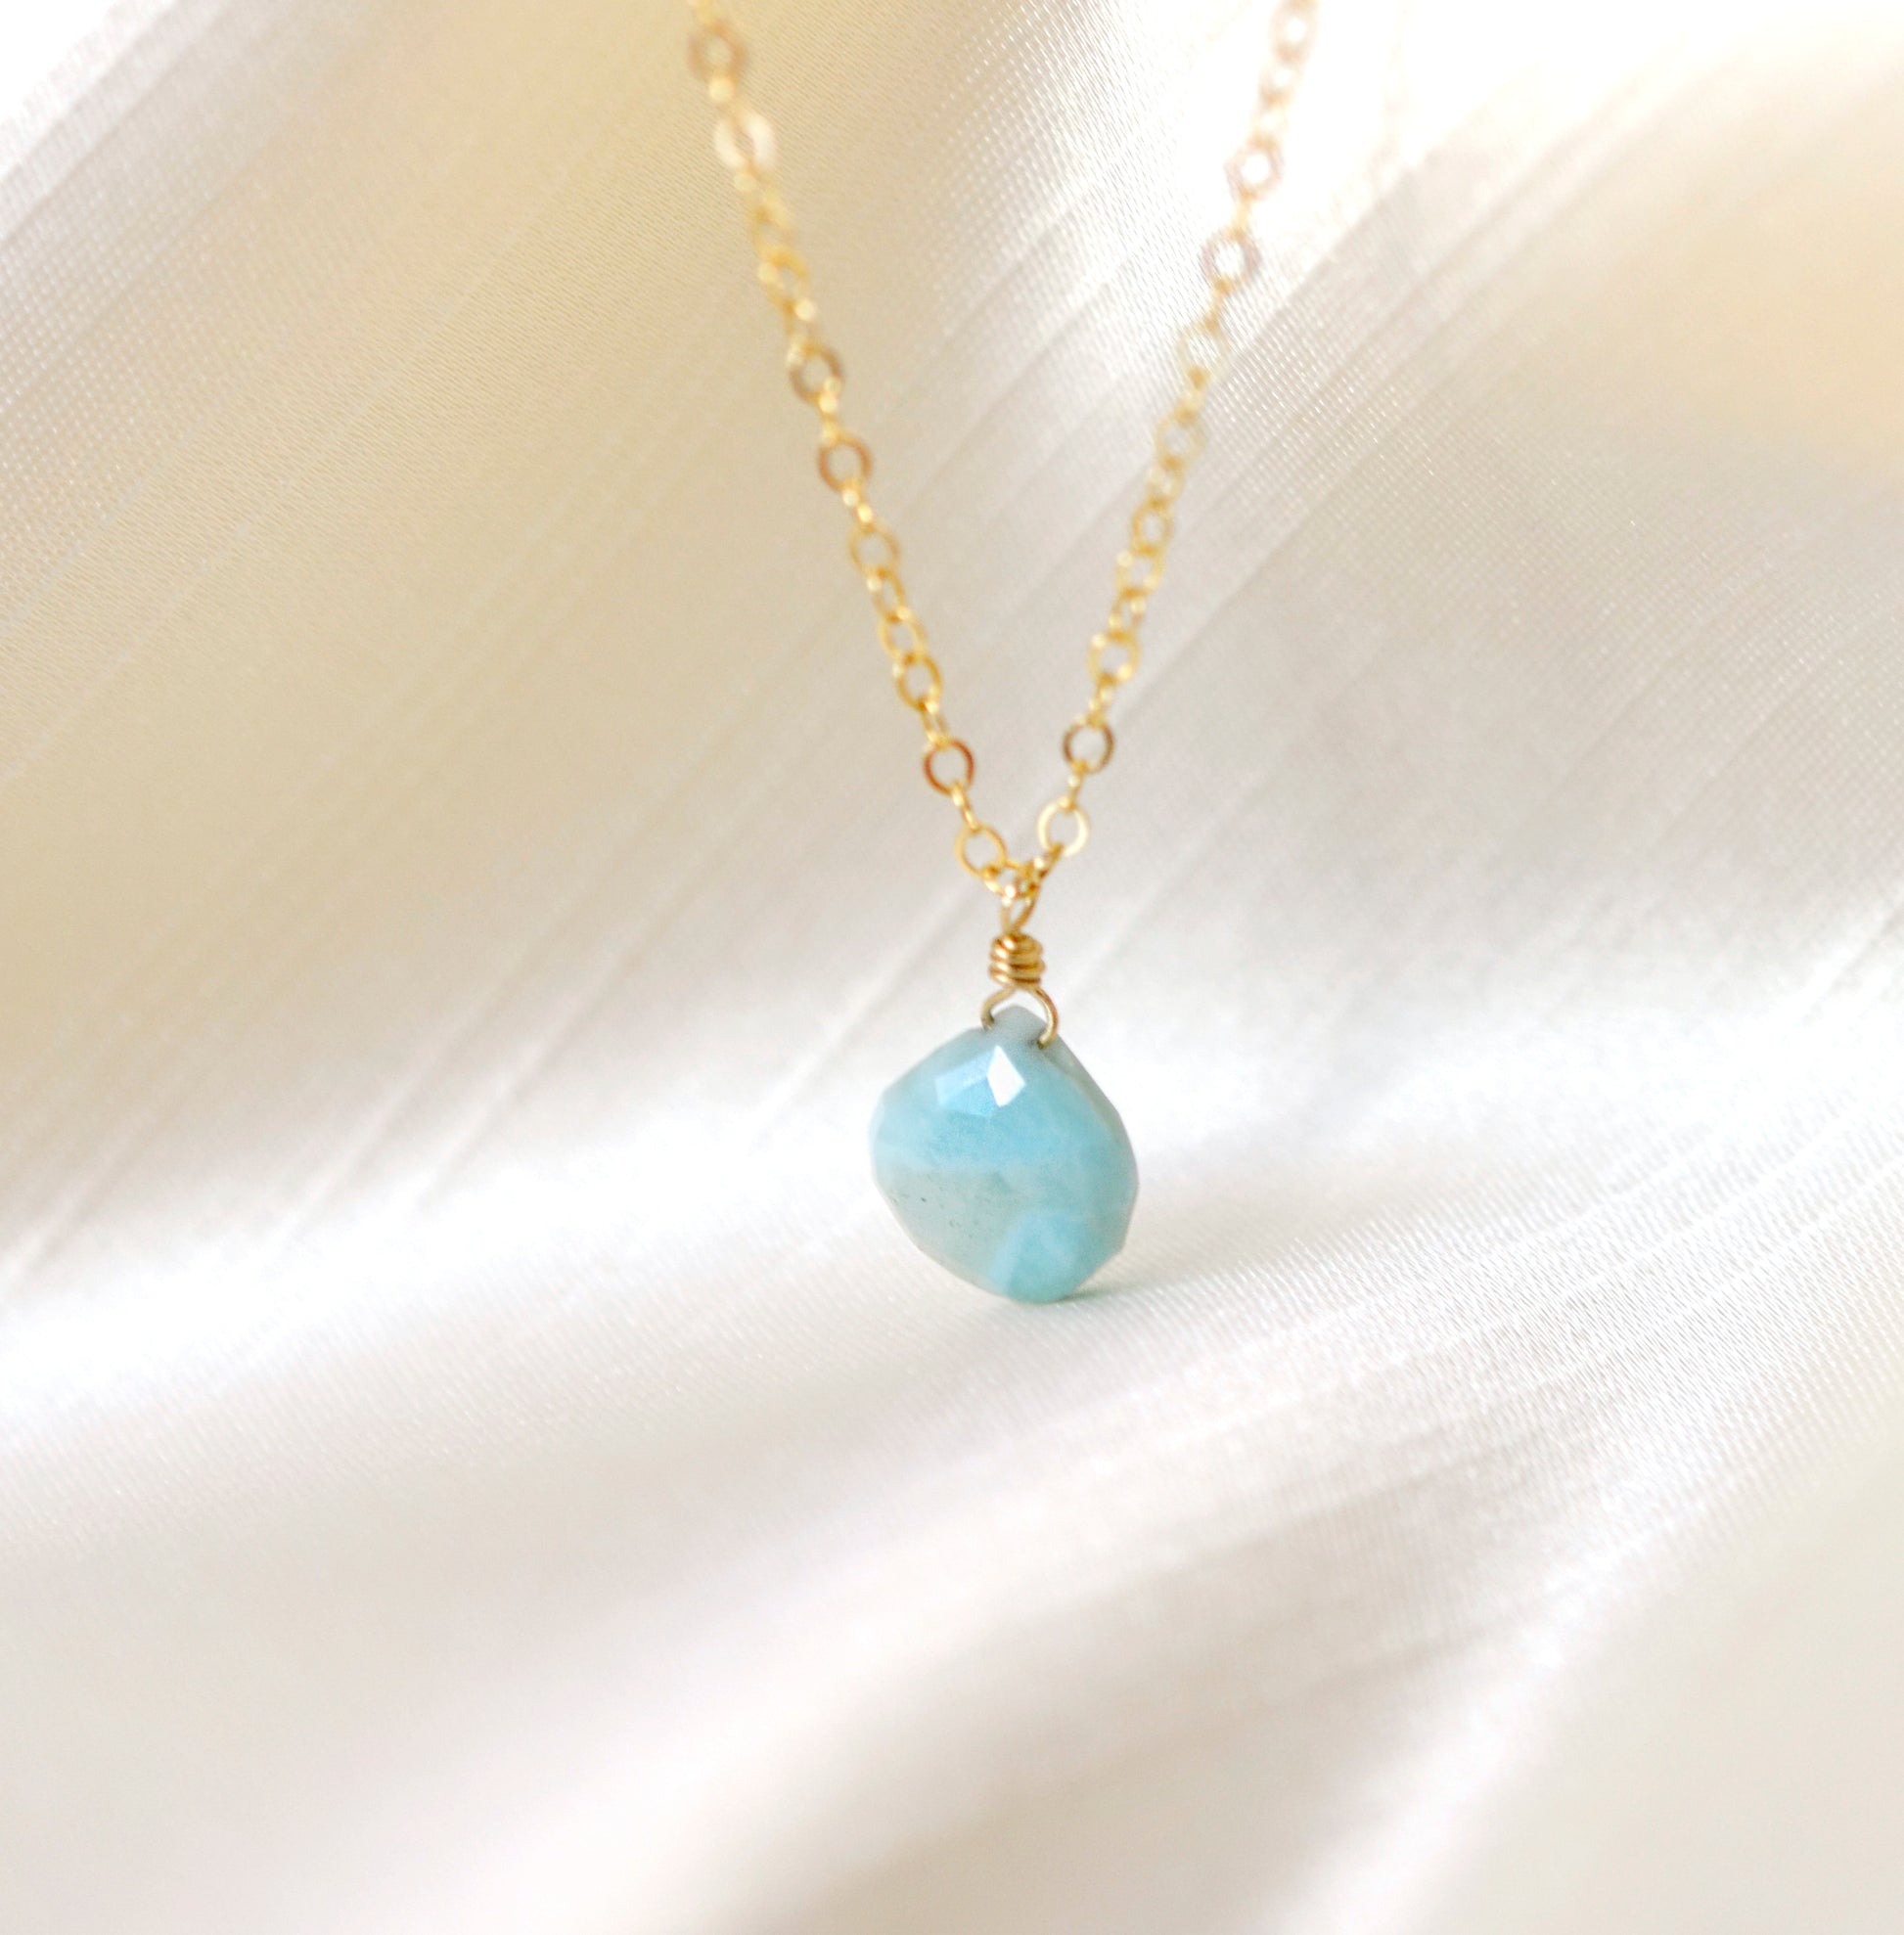 Natural aqua-blue Larimar faceted teardrop pendant set onto a 14k gold filled chain.